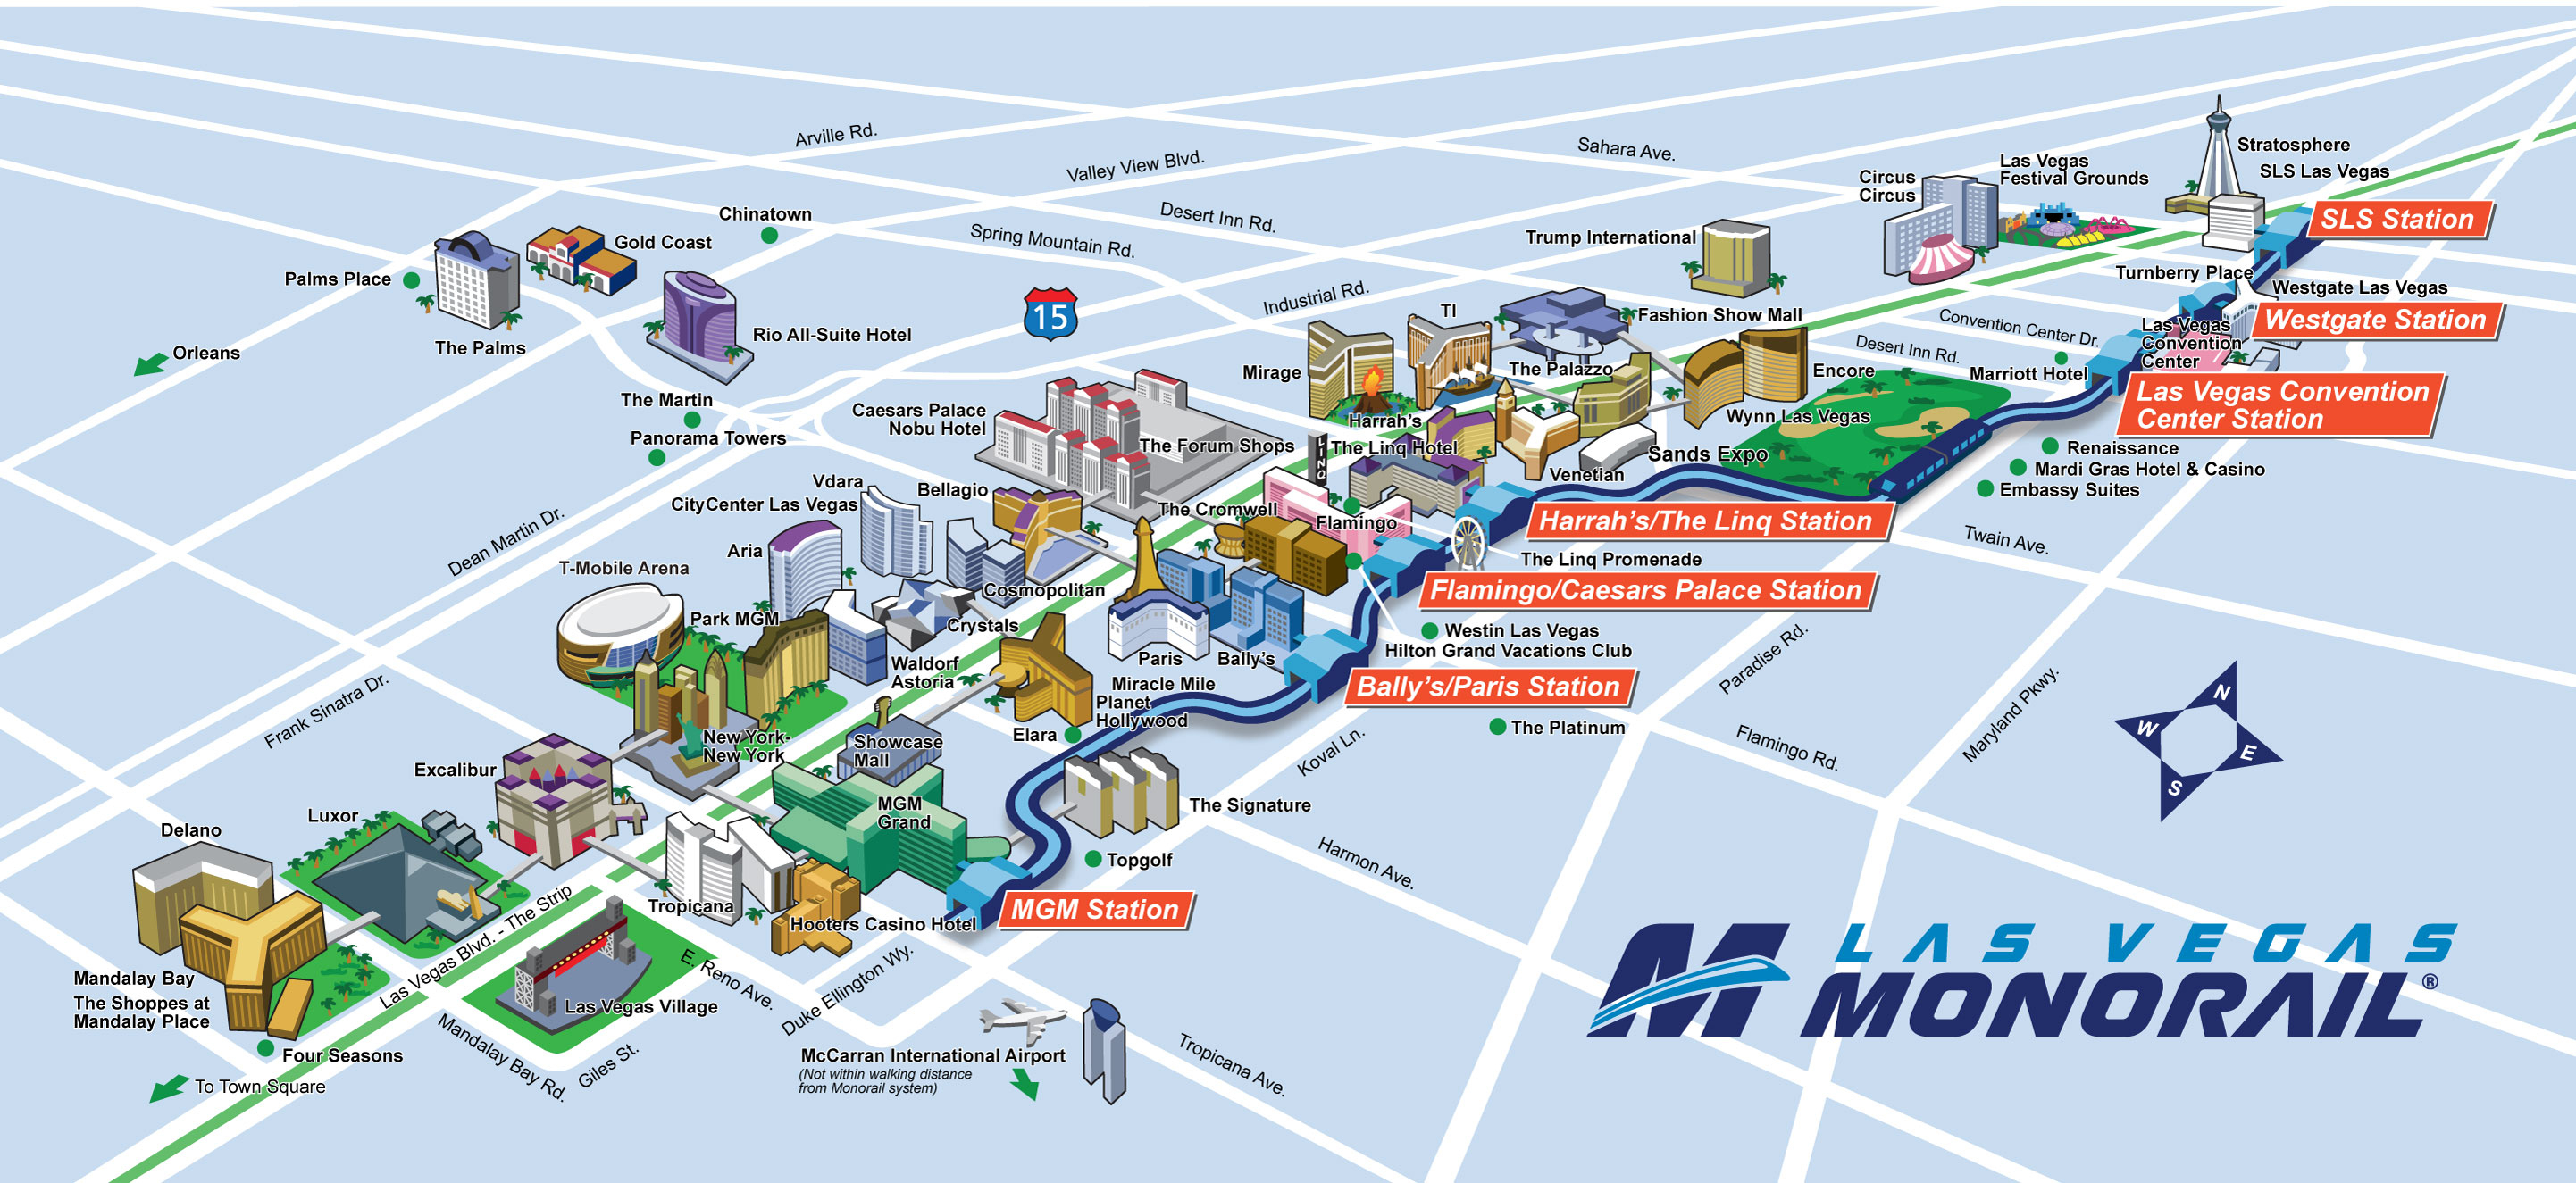 Route Map | Las Vegas Monorail - Printable Map Of Las Vegas Strip